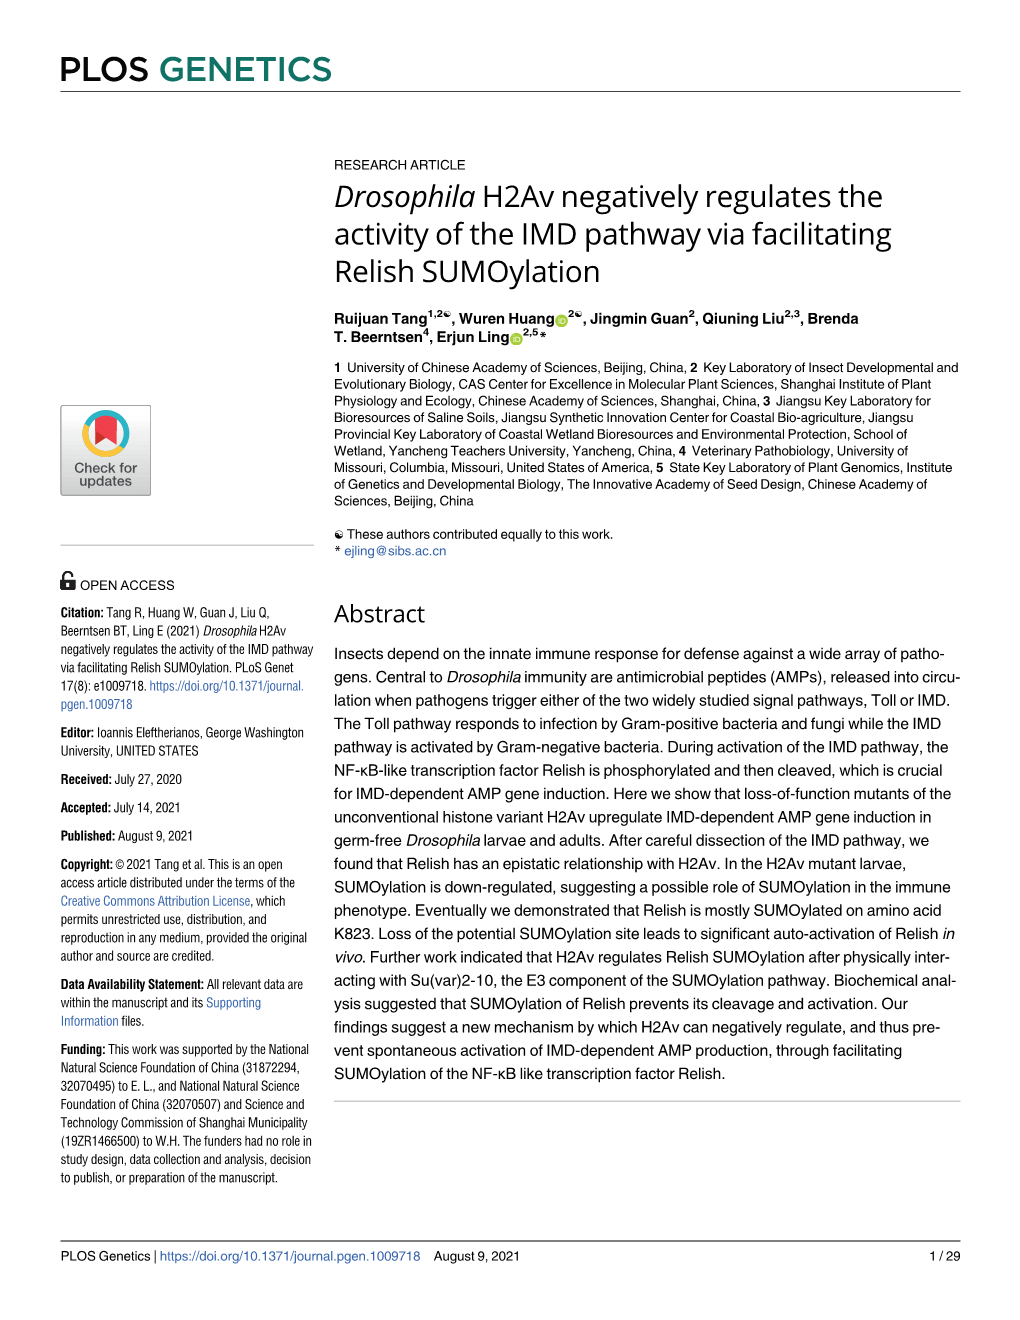 Drosophila H2av Negatively Regulates the Activity of the IMD Pathway Via Facilitating Relish Sumoylation